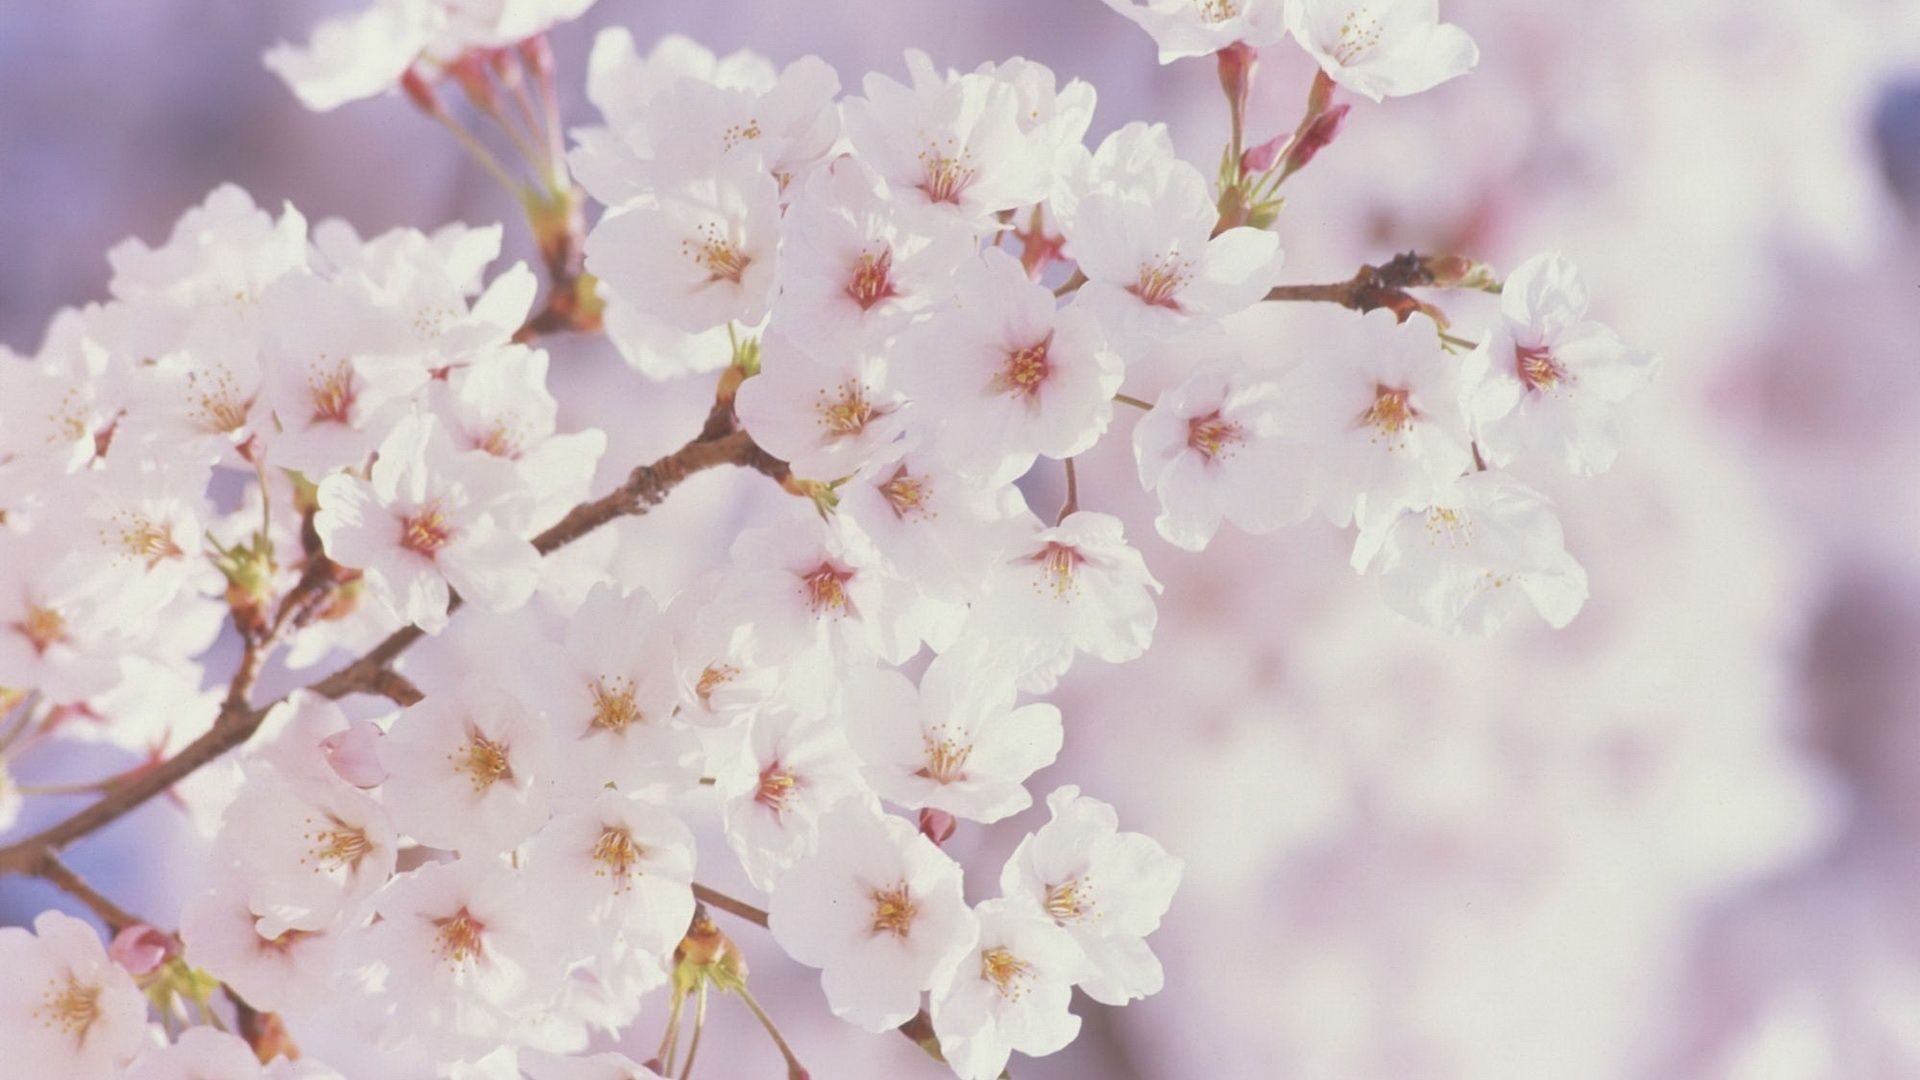 Spring flowers - Spring Wallpaper 22176495 - Fanpop